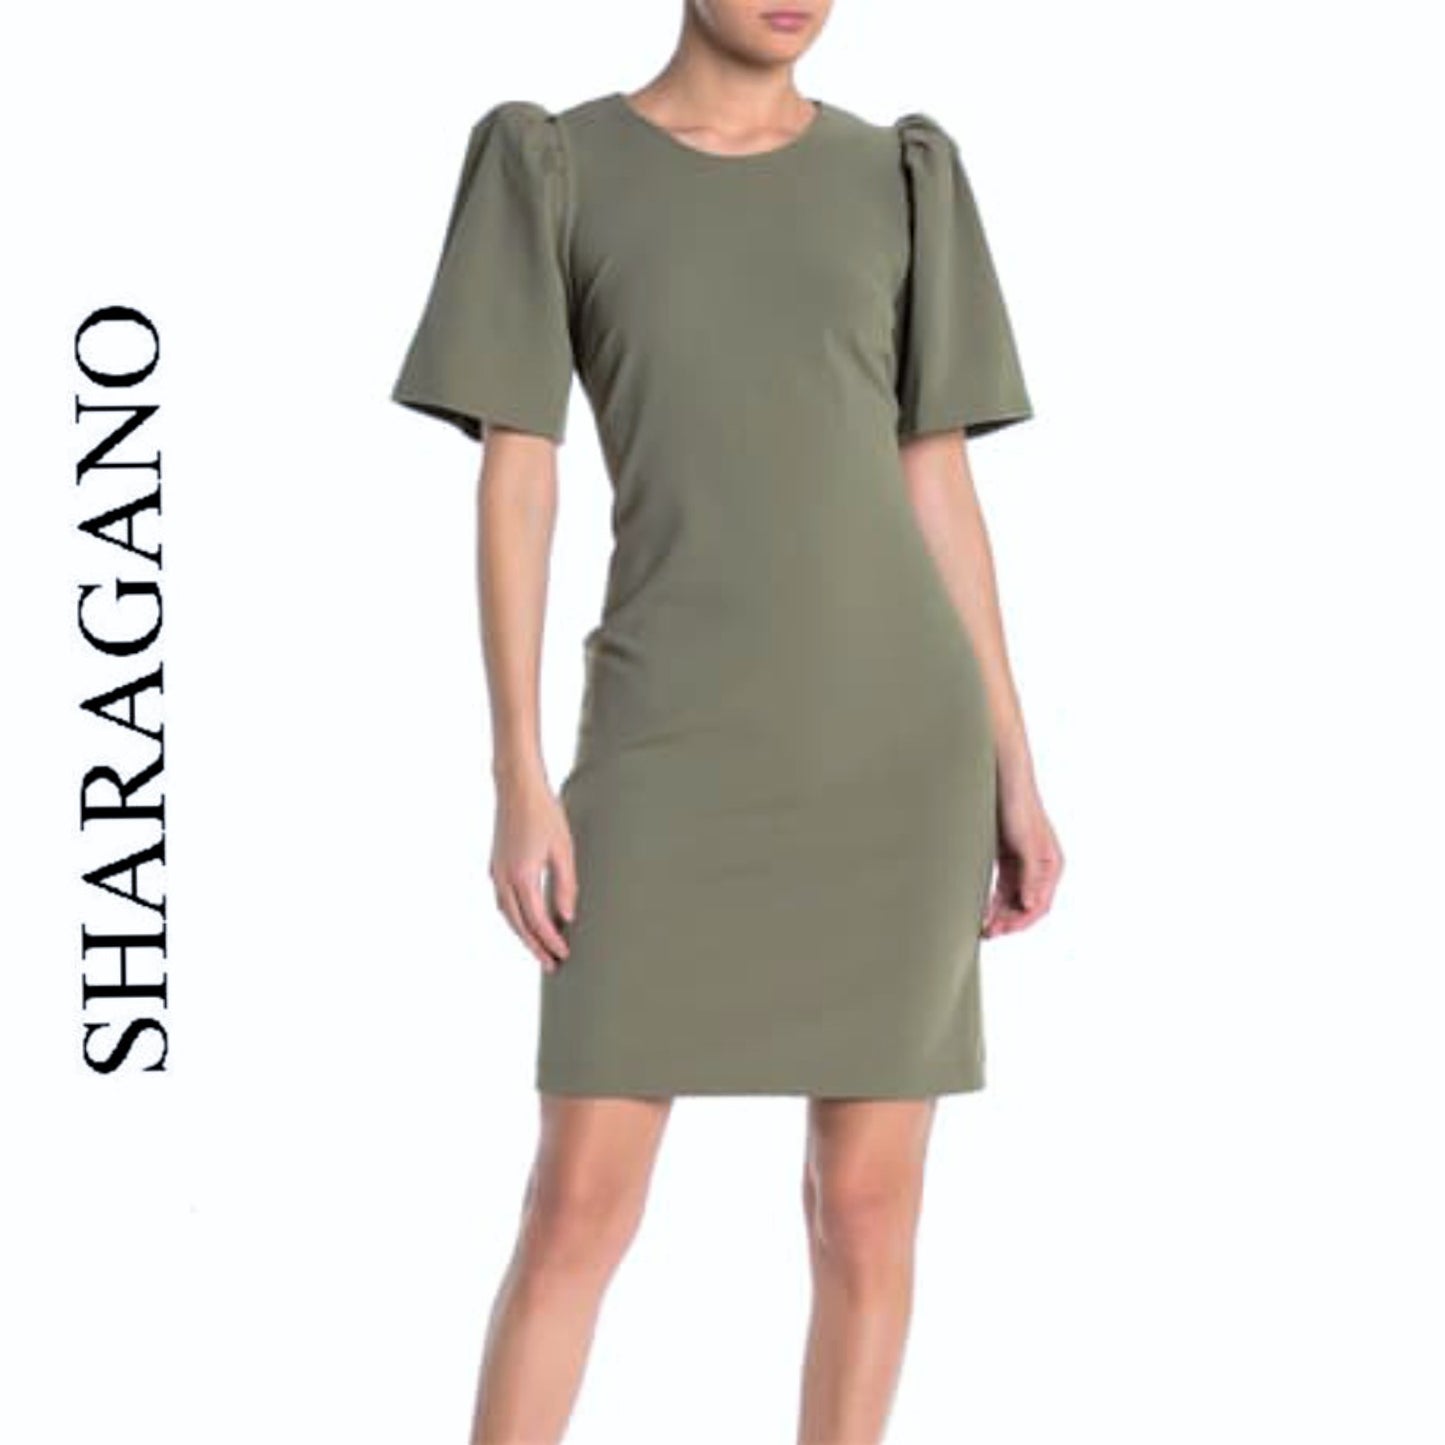 SHARAGANO Elbow Sleeve Shift Dress Olive